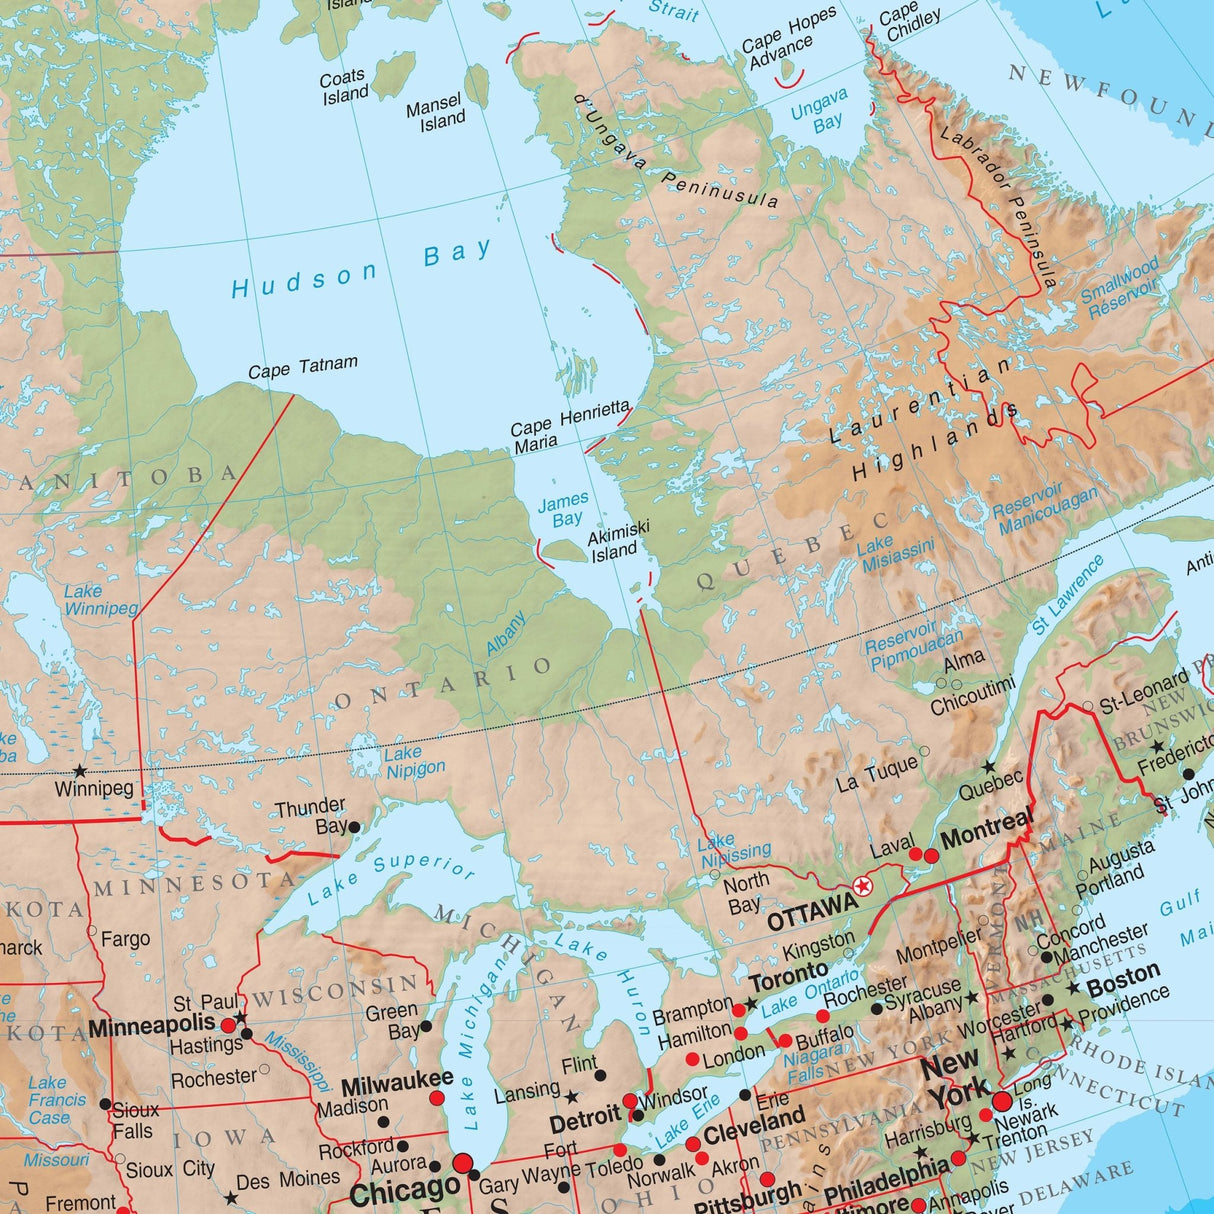 North America Advanced Physical Wall Map - KA-NAM-ADV-PHY-46X42-PAPER - Ultimate Globes